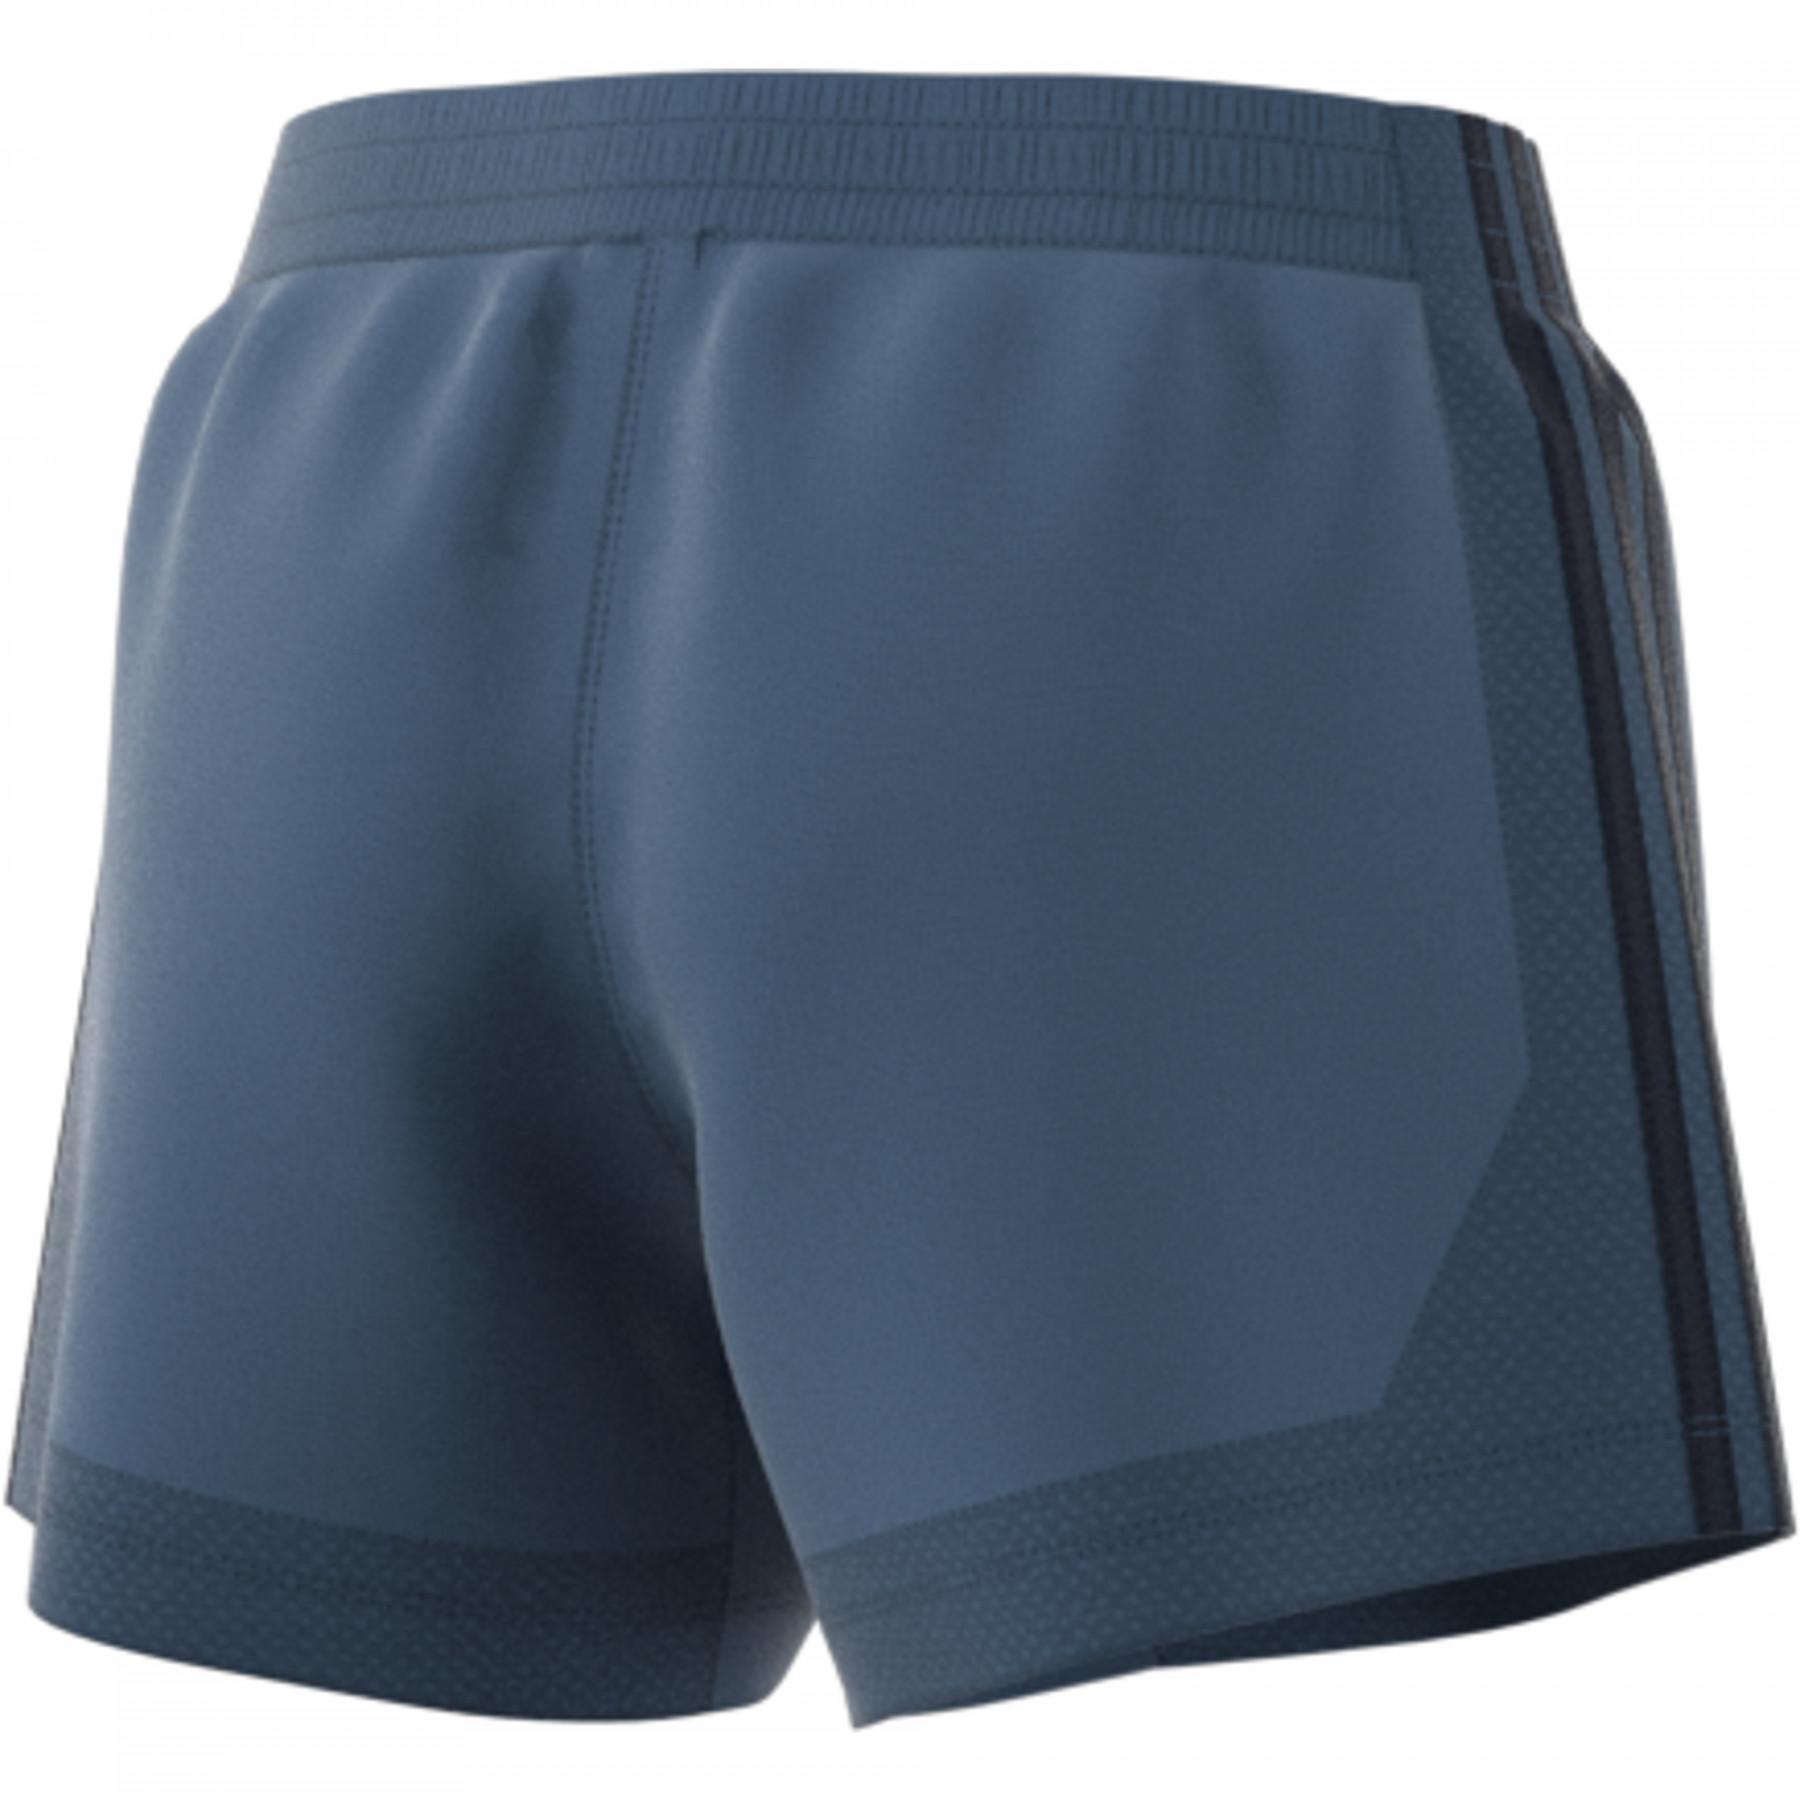 Women's shorts adidas 3-Stripes 5-Inch Mesh